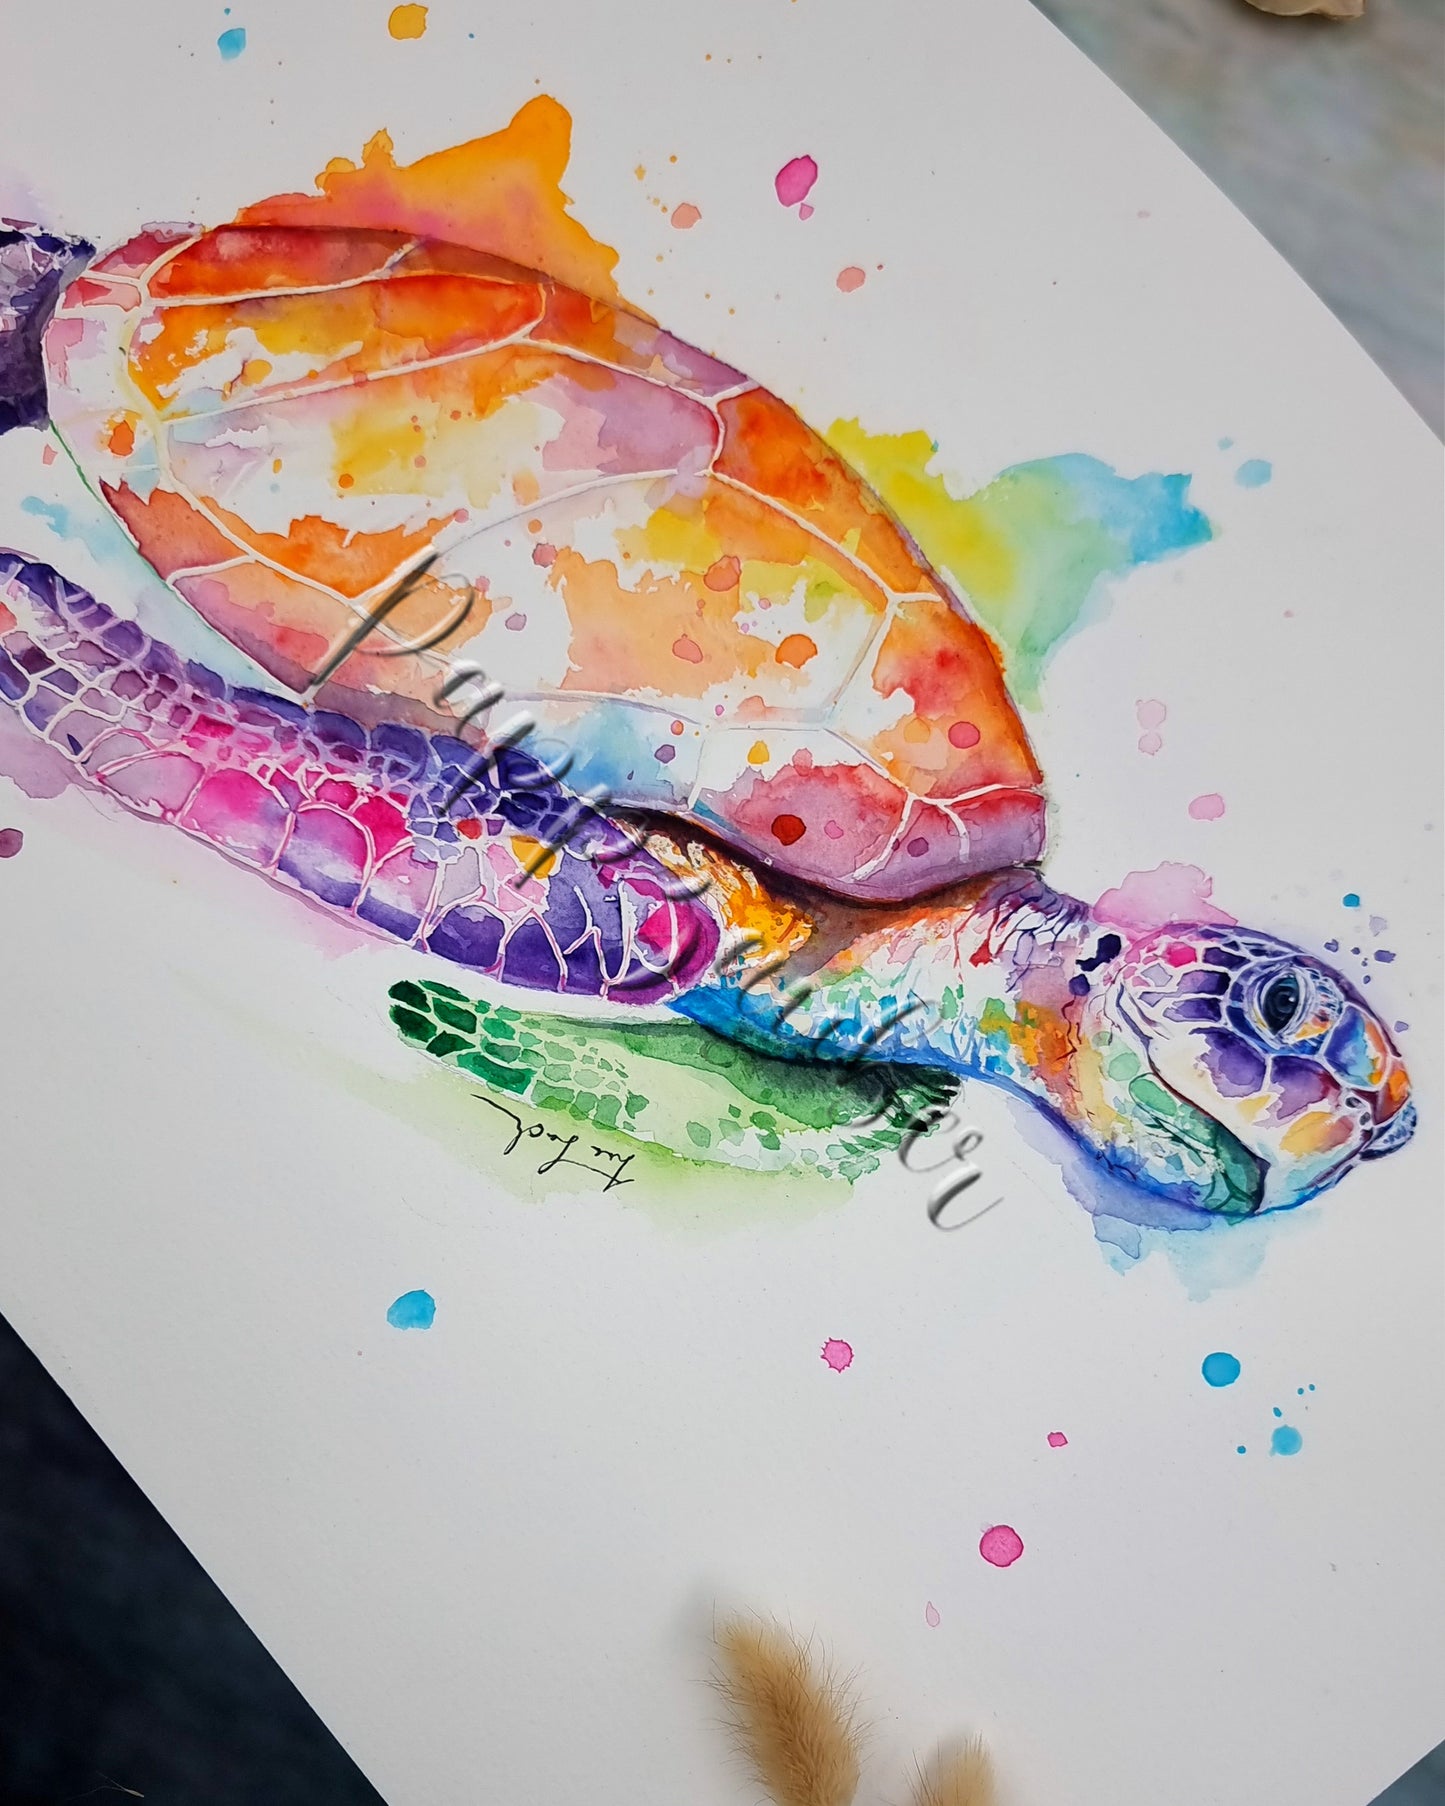 Meeresschildkröte Fjella - Farbenfrohes Aquarellgemälde (Kunstdruck)  -